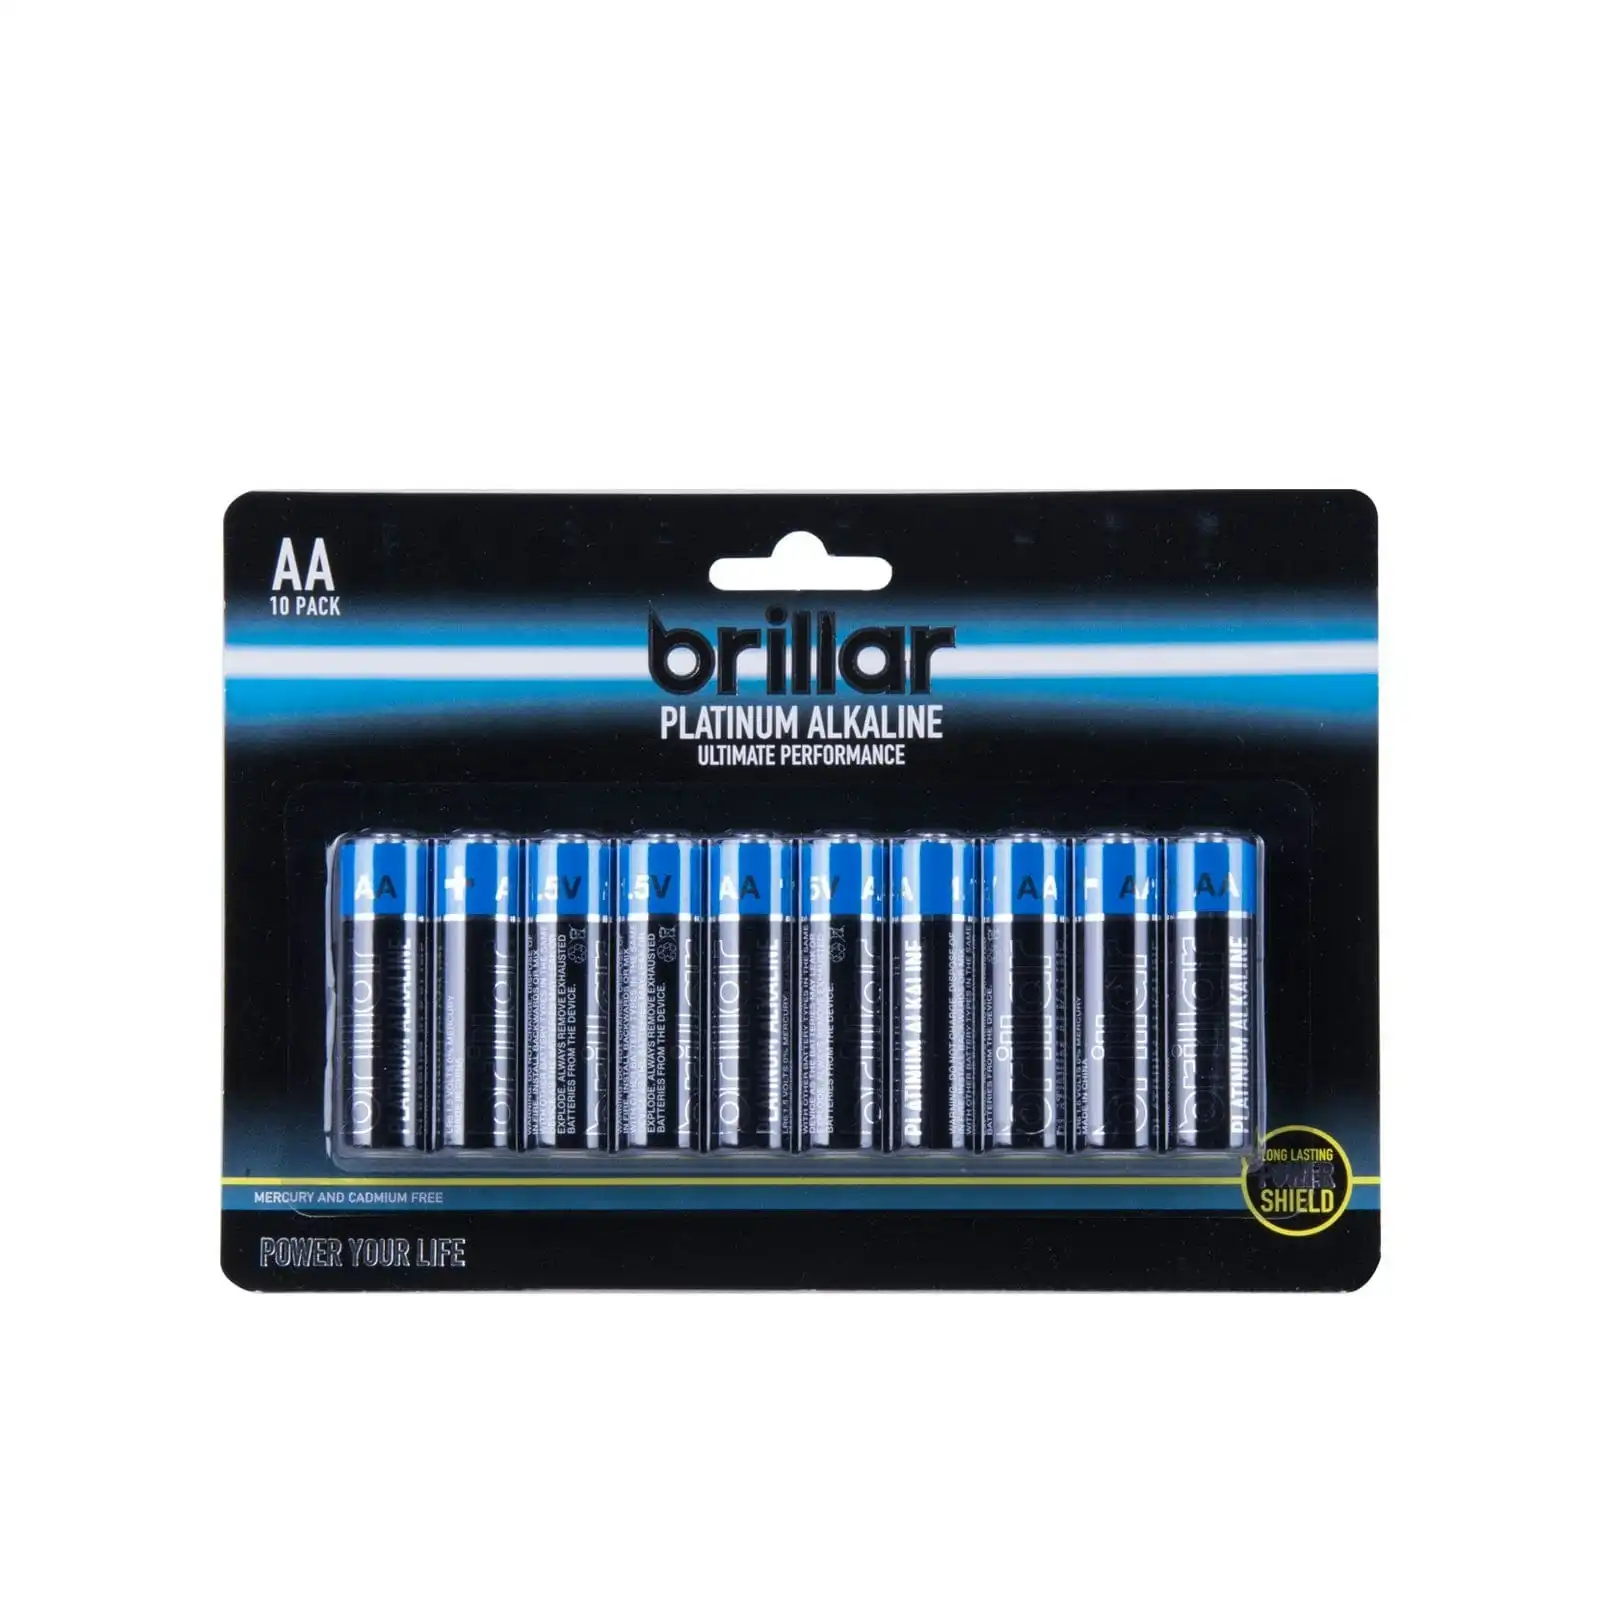 2x Brillar AA Platinum Alkaline Batteries 10pk